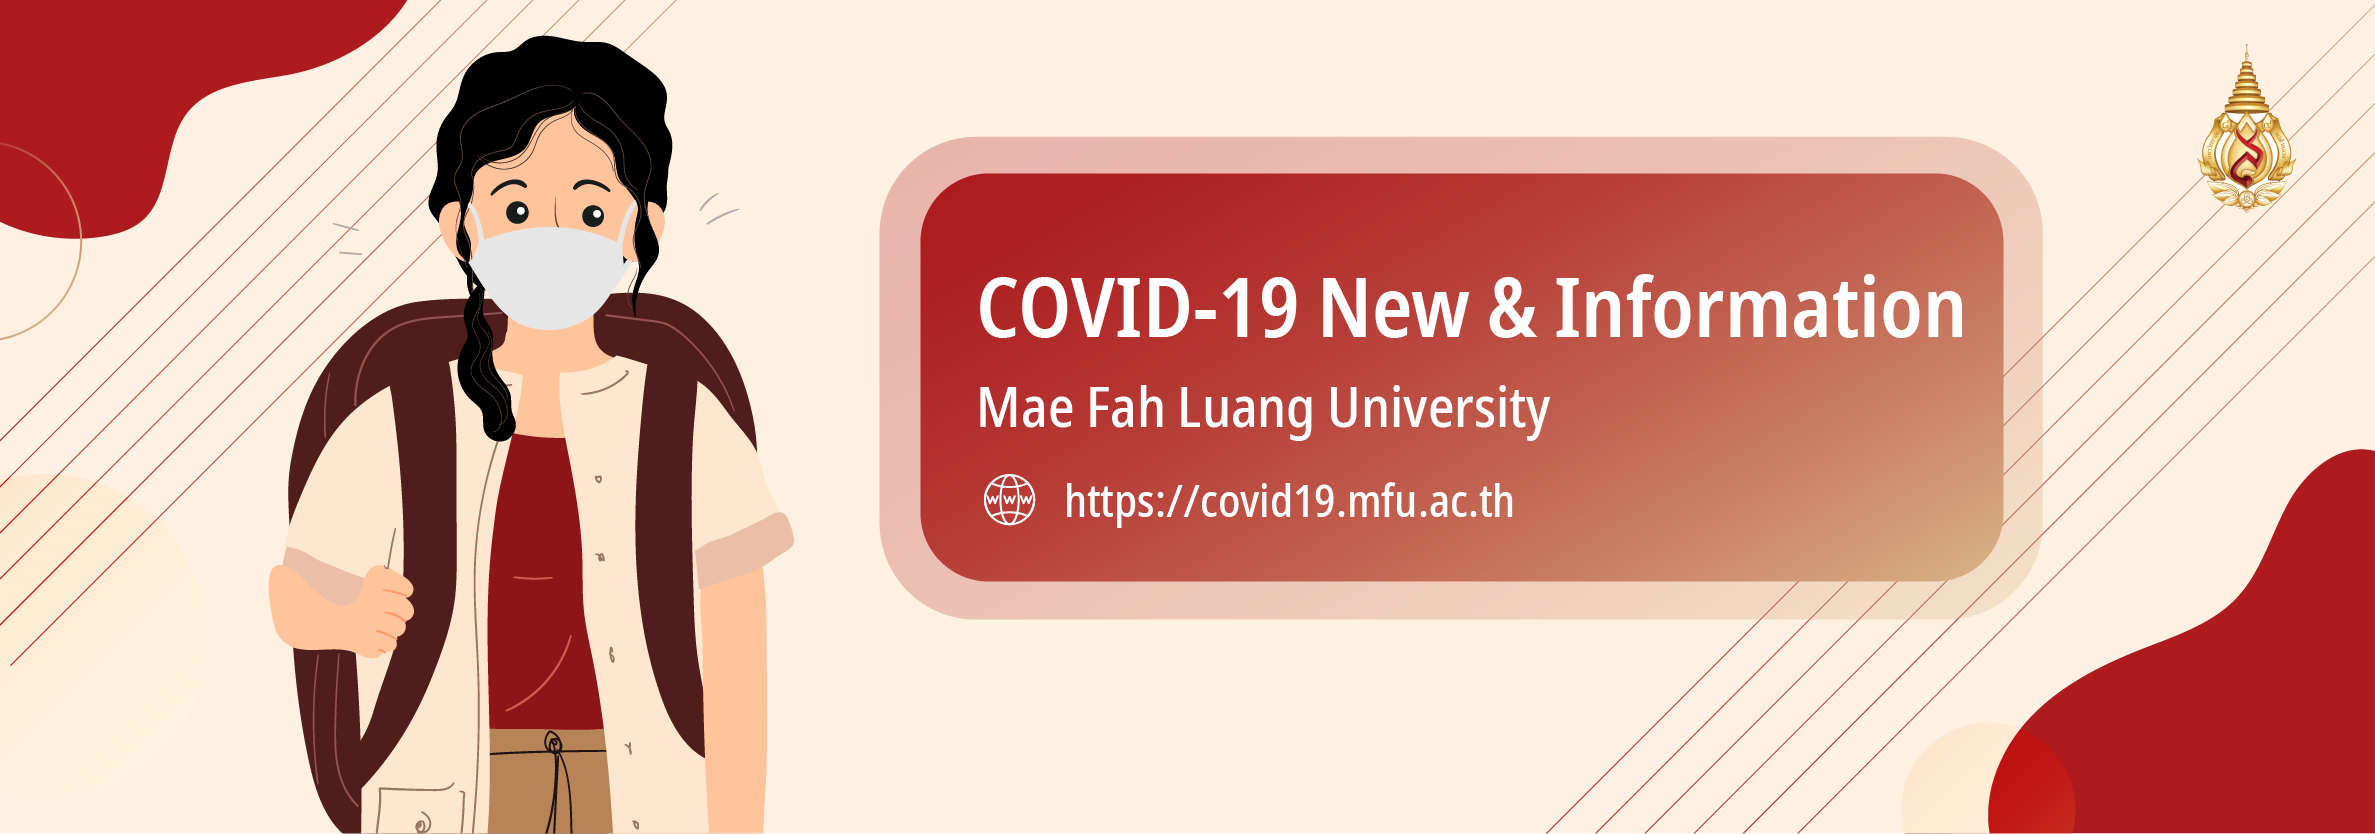 Covid-19 website